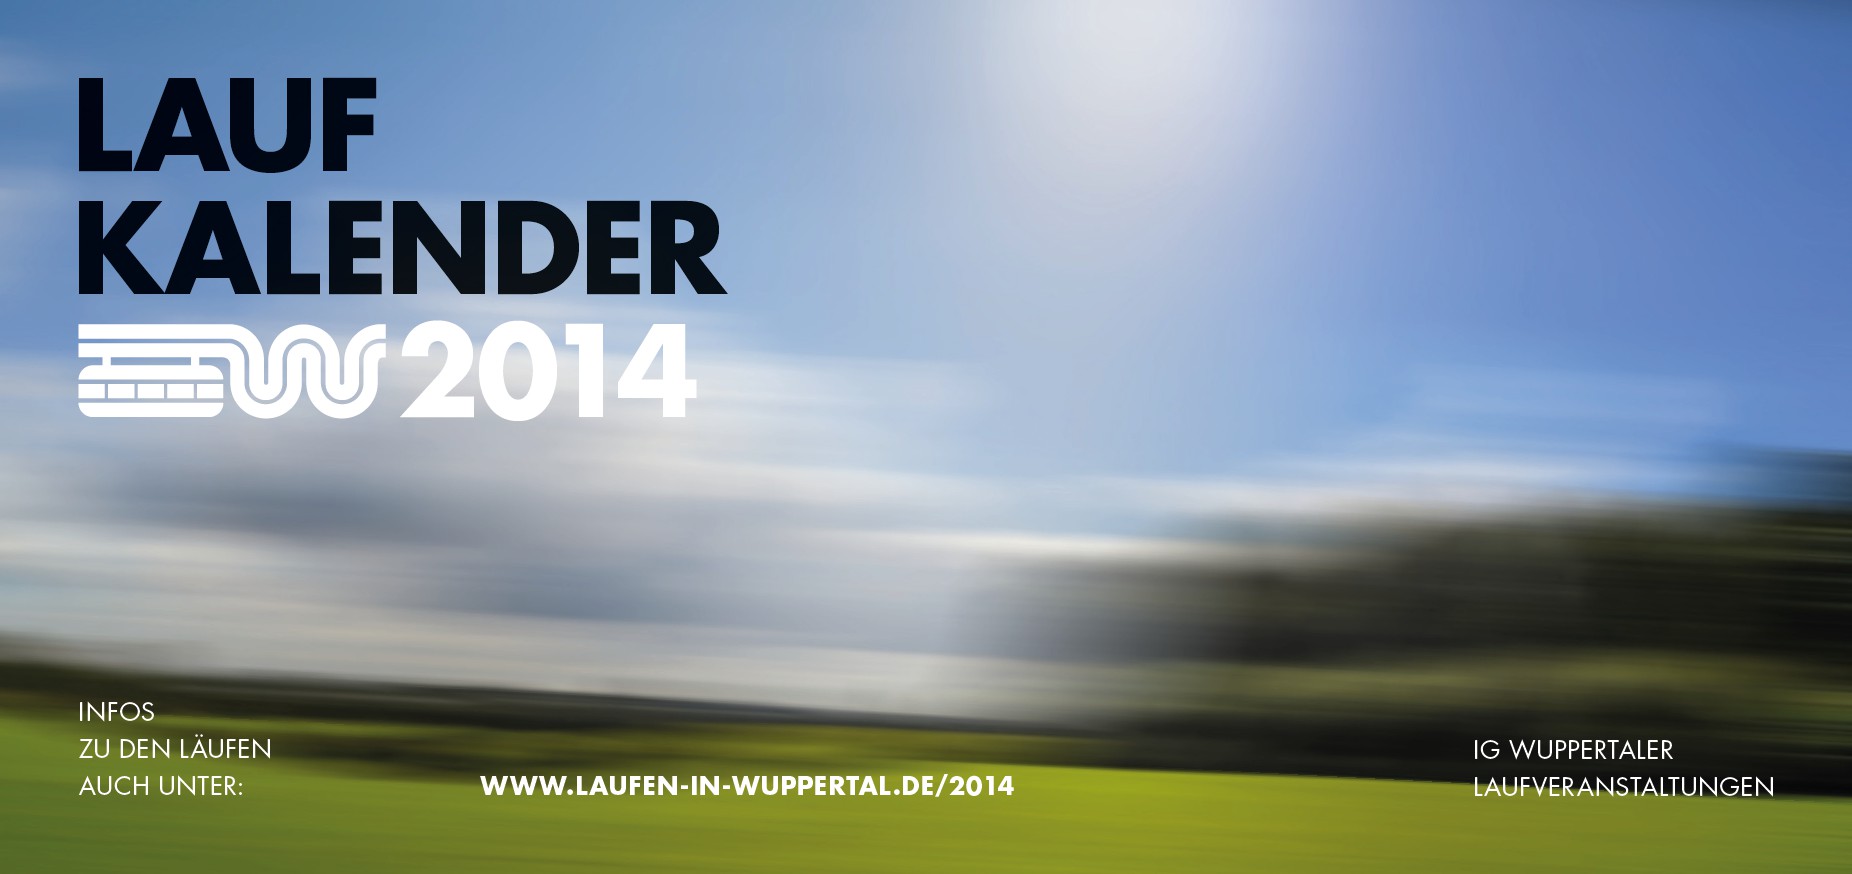 Wuppertaler Laufkalender 2014